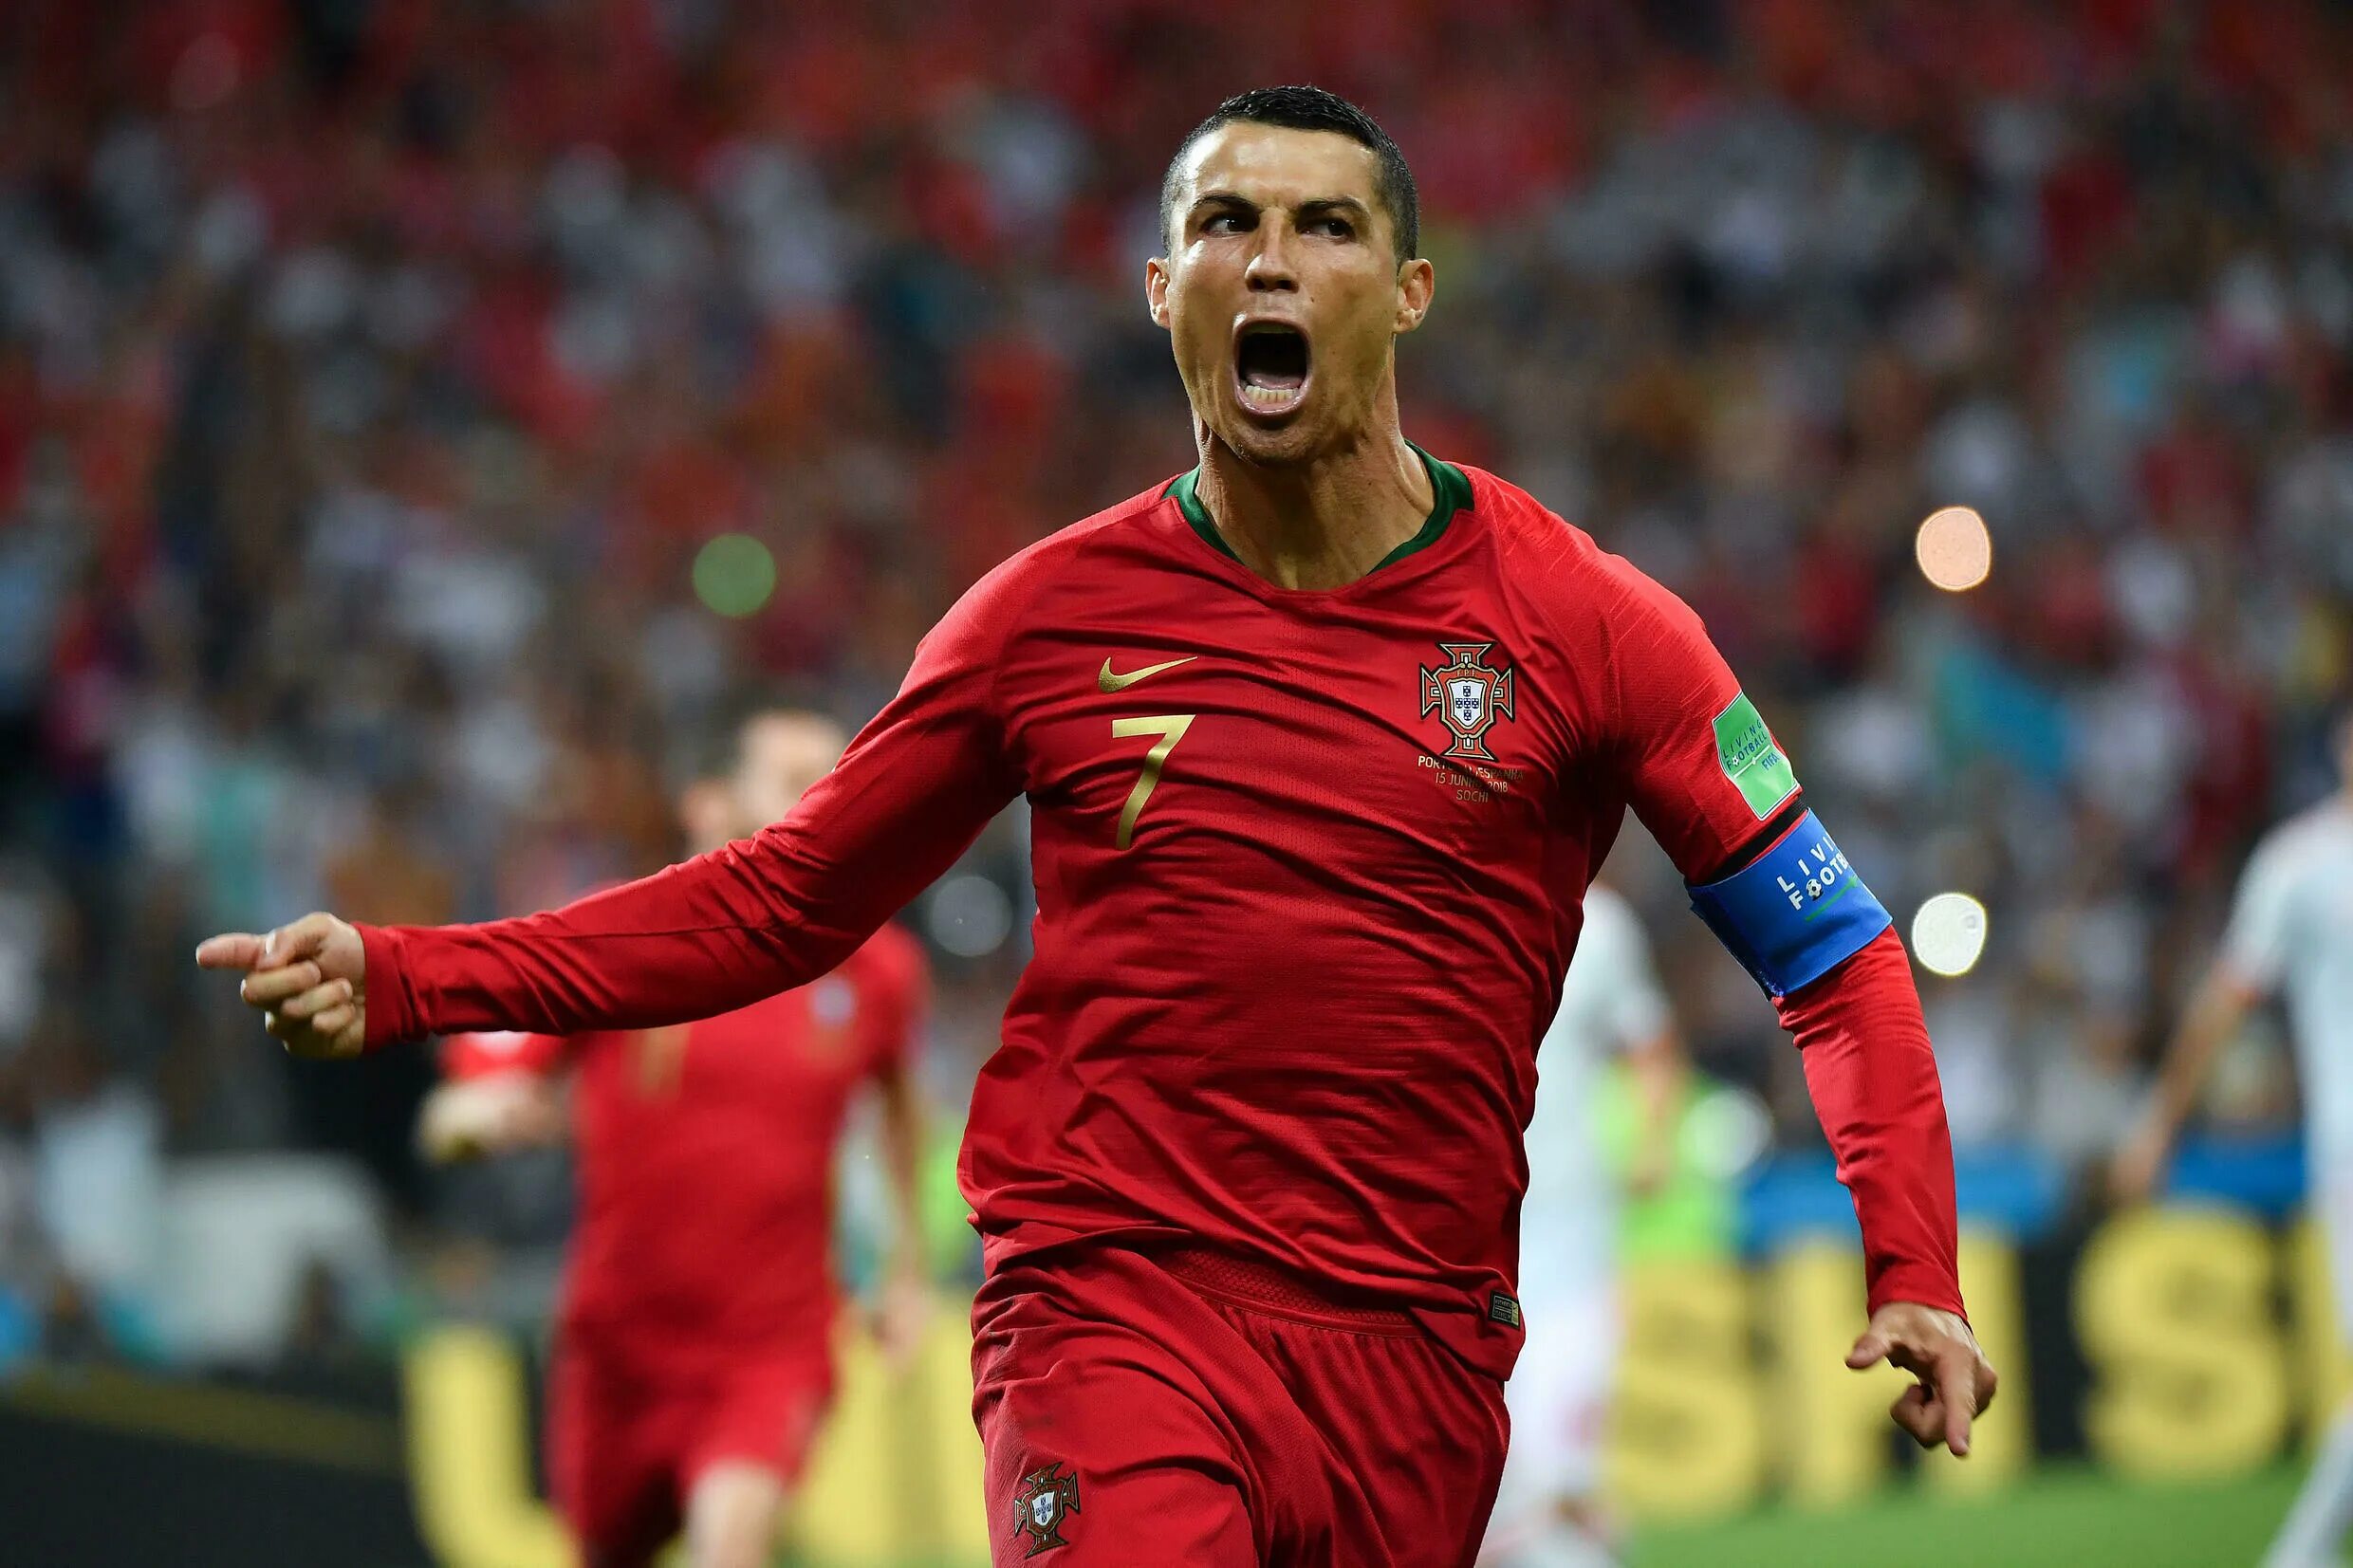 1 2 июня 2018. Роналдо Португалия. Криштиану Роналду сборная Португалии. Cristiano Ronaldo Portugal World Cup. Роналду 2018 Испания Португалия.